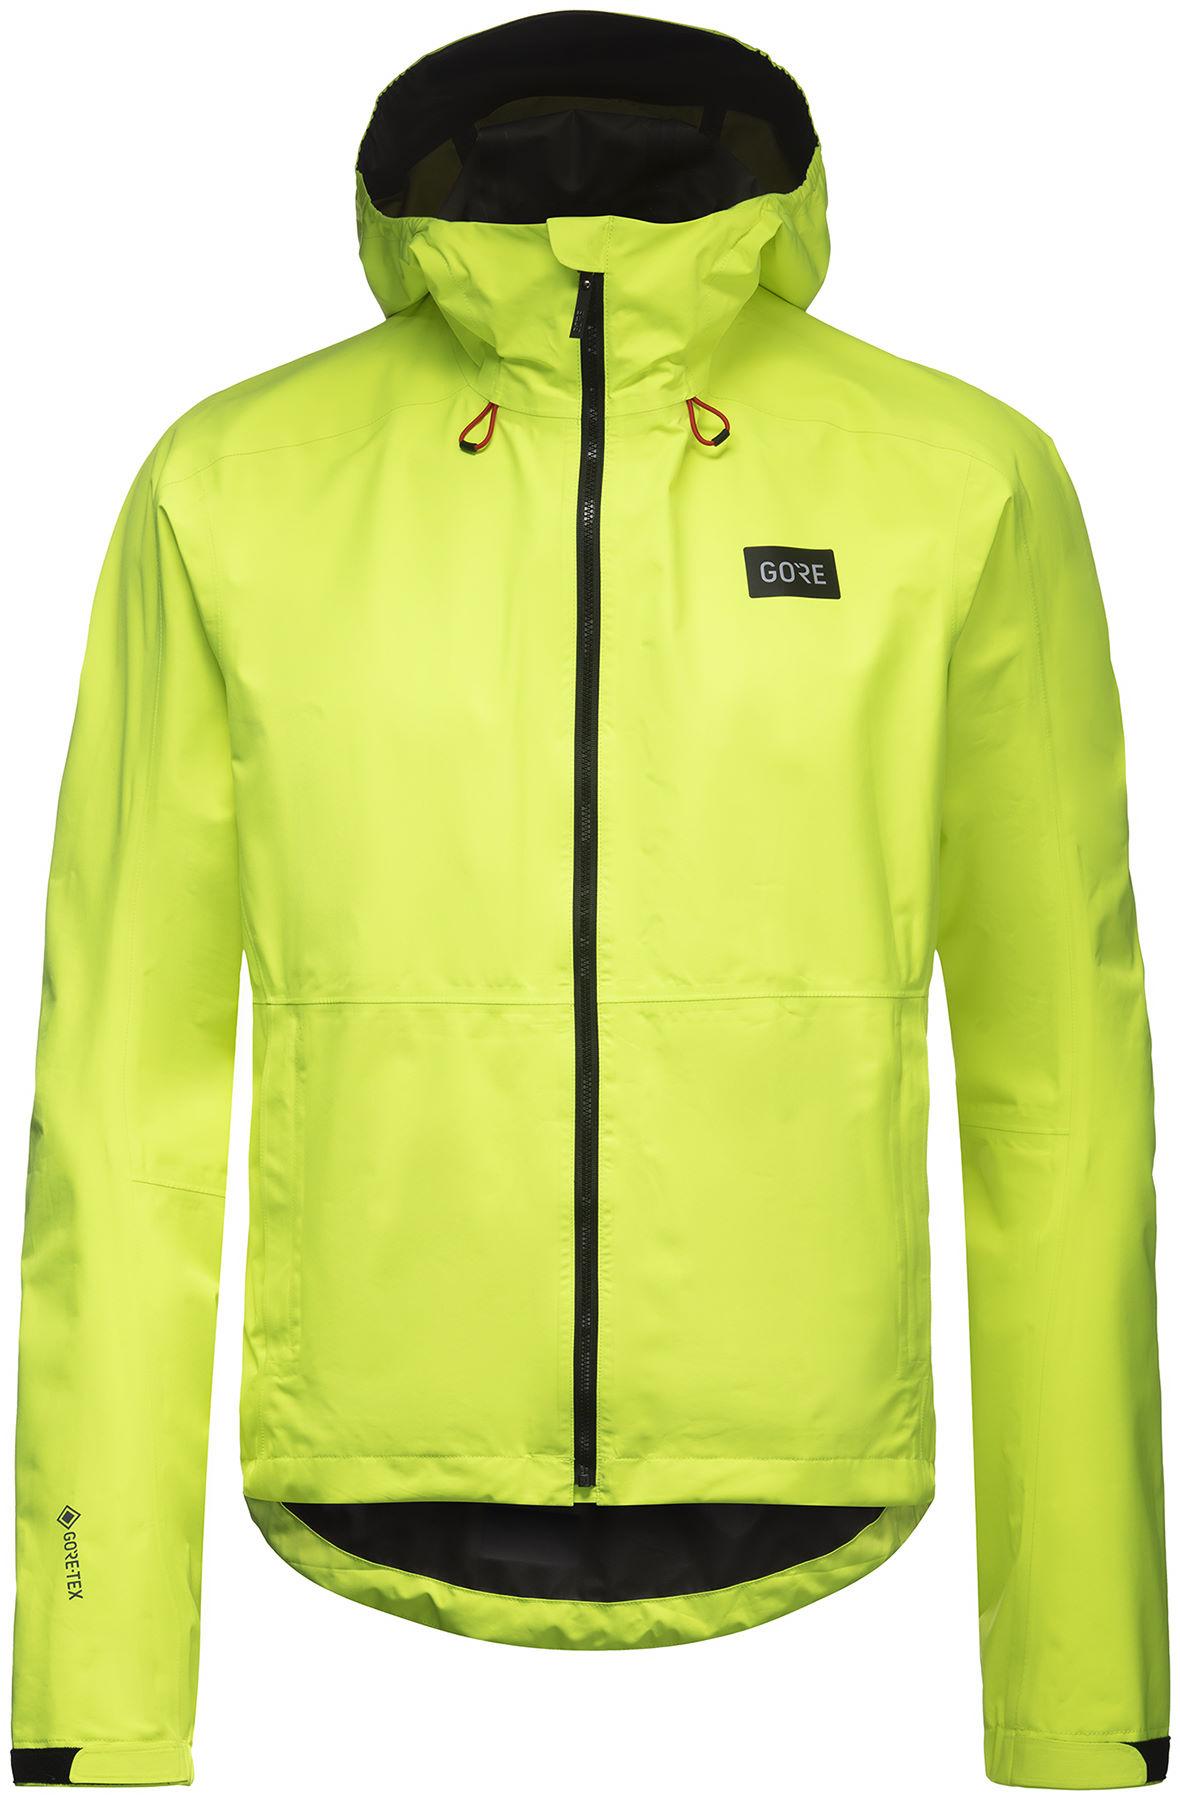 Gorewear Endure Jacket - Neon Yellow